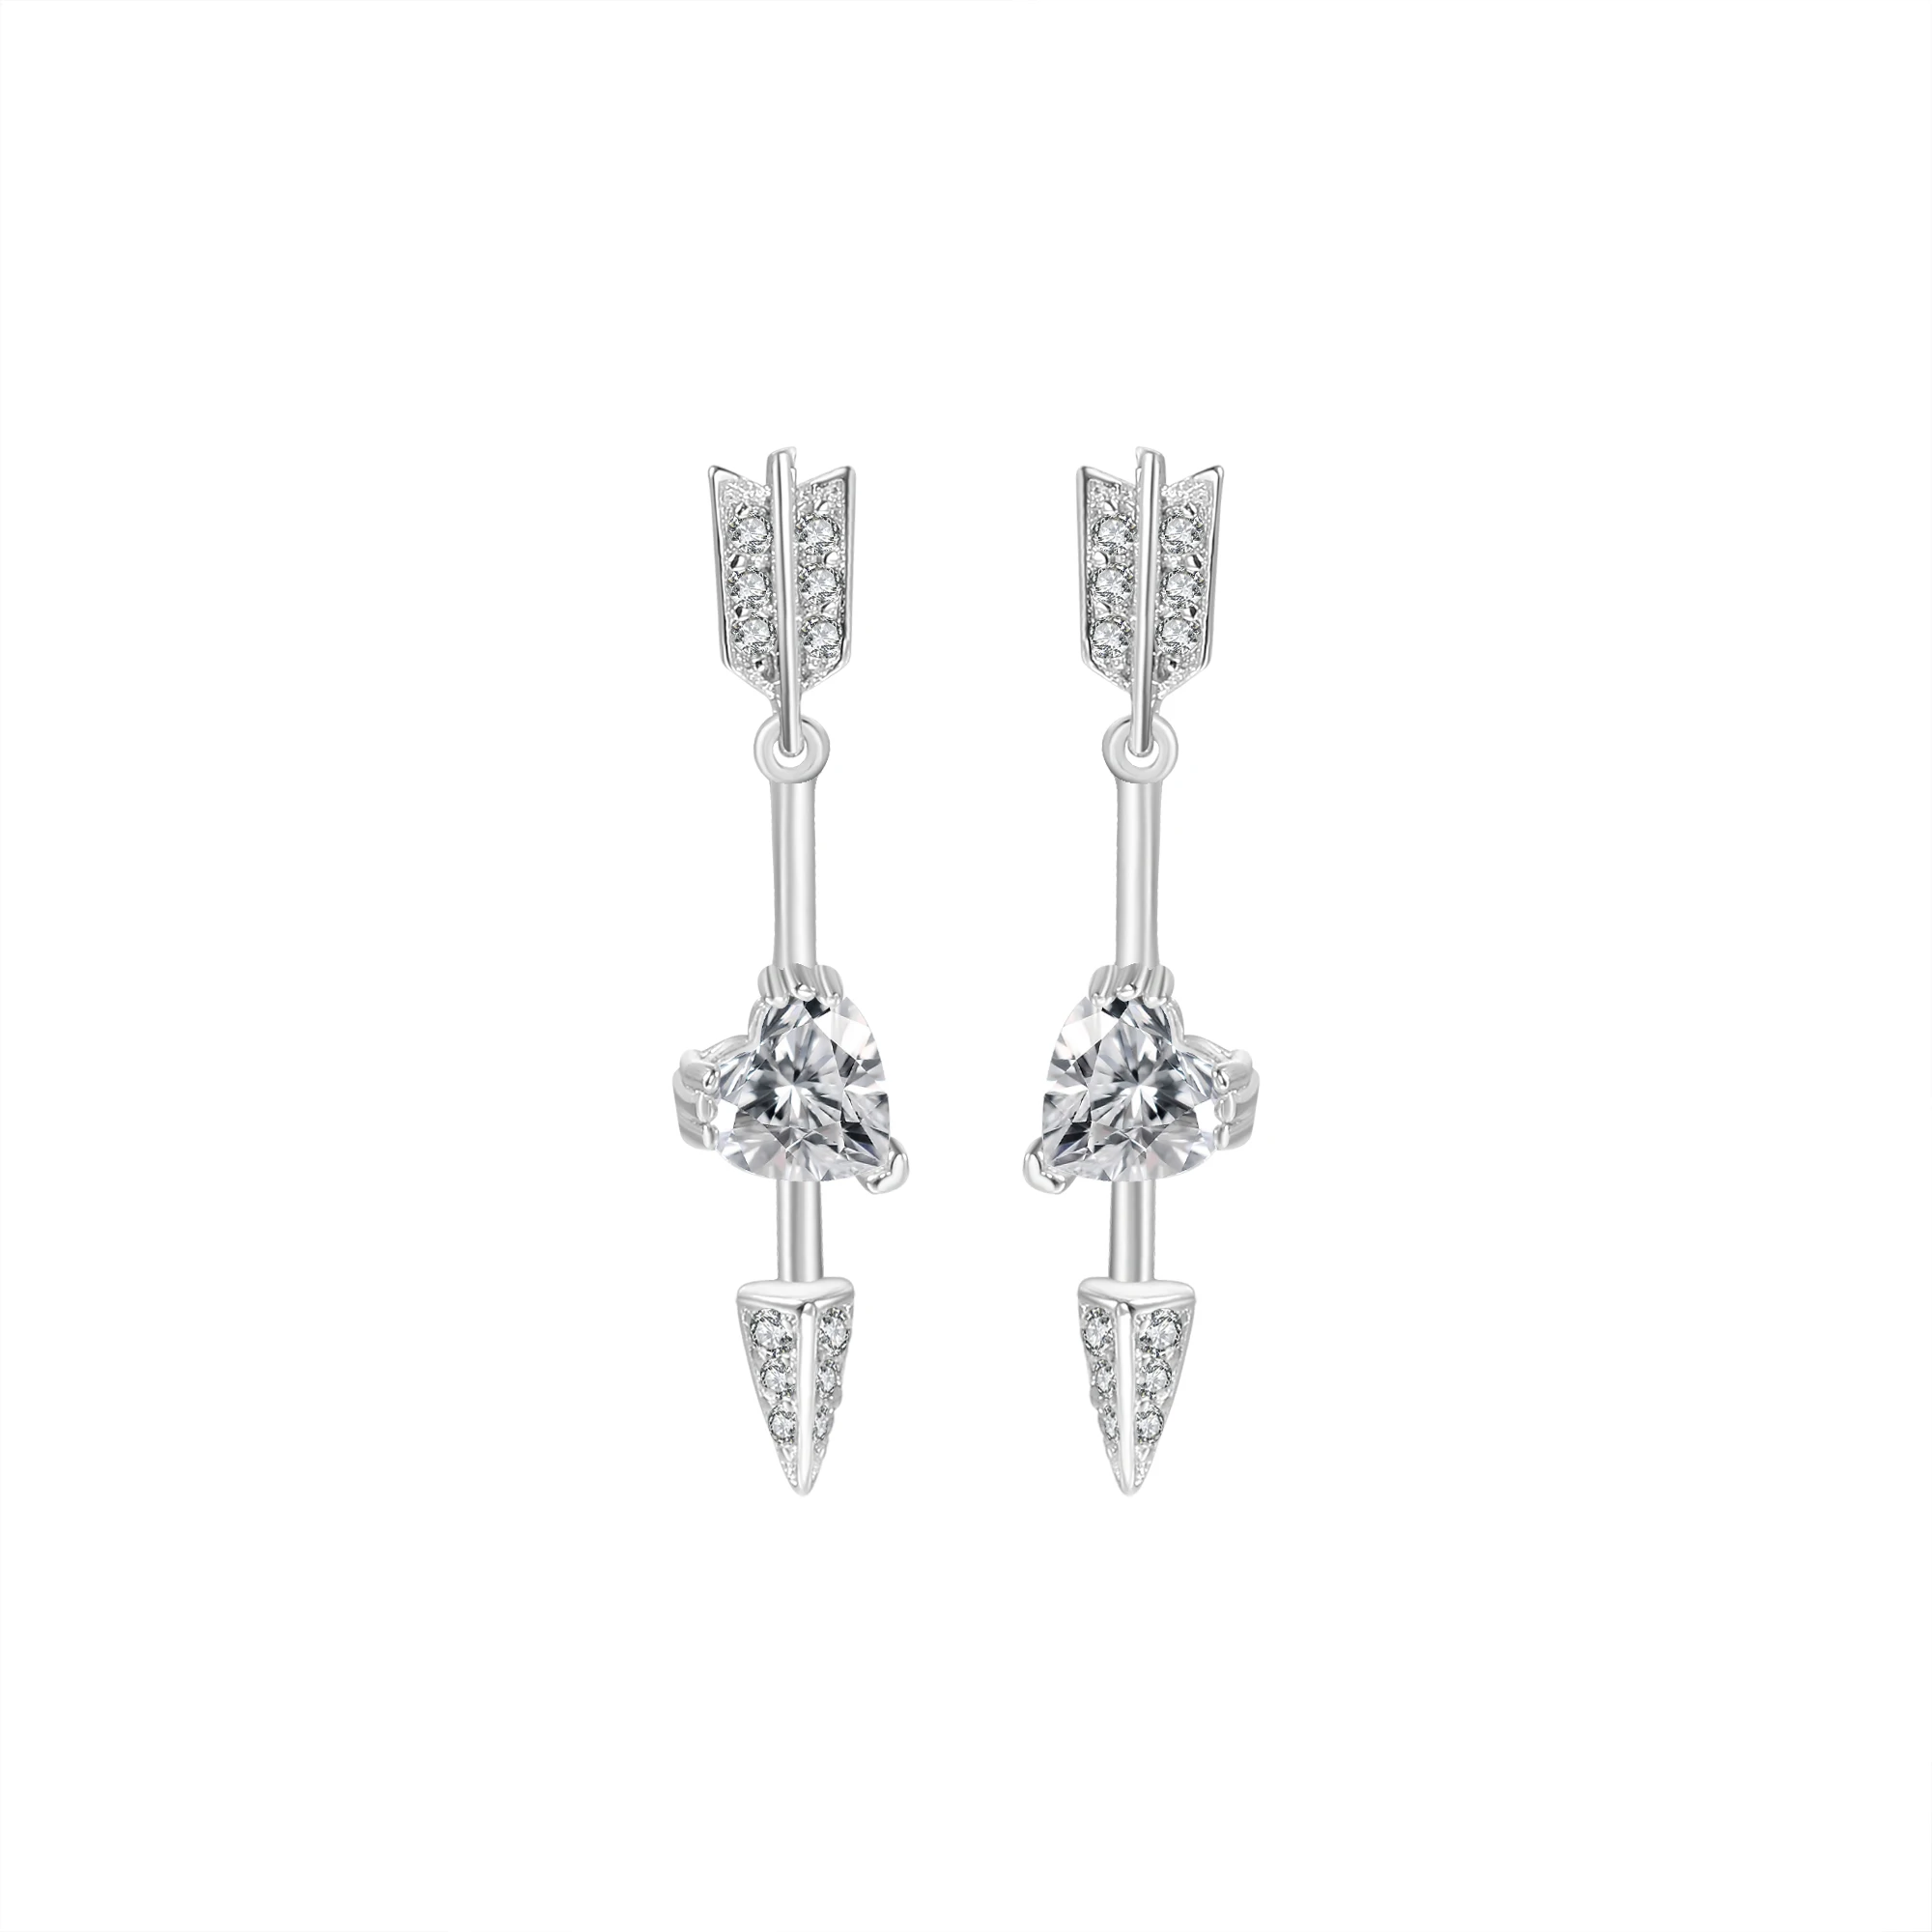 Romantic Forever Love Crystal Heart Arrow Stud Earrings Silver Jewelry ...